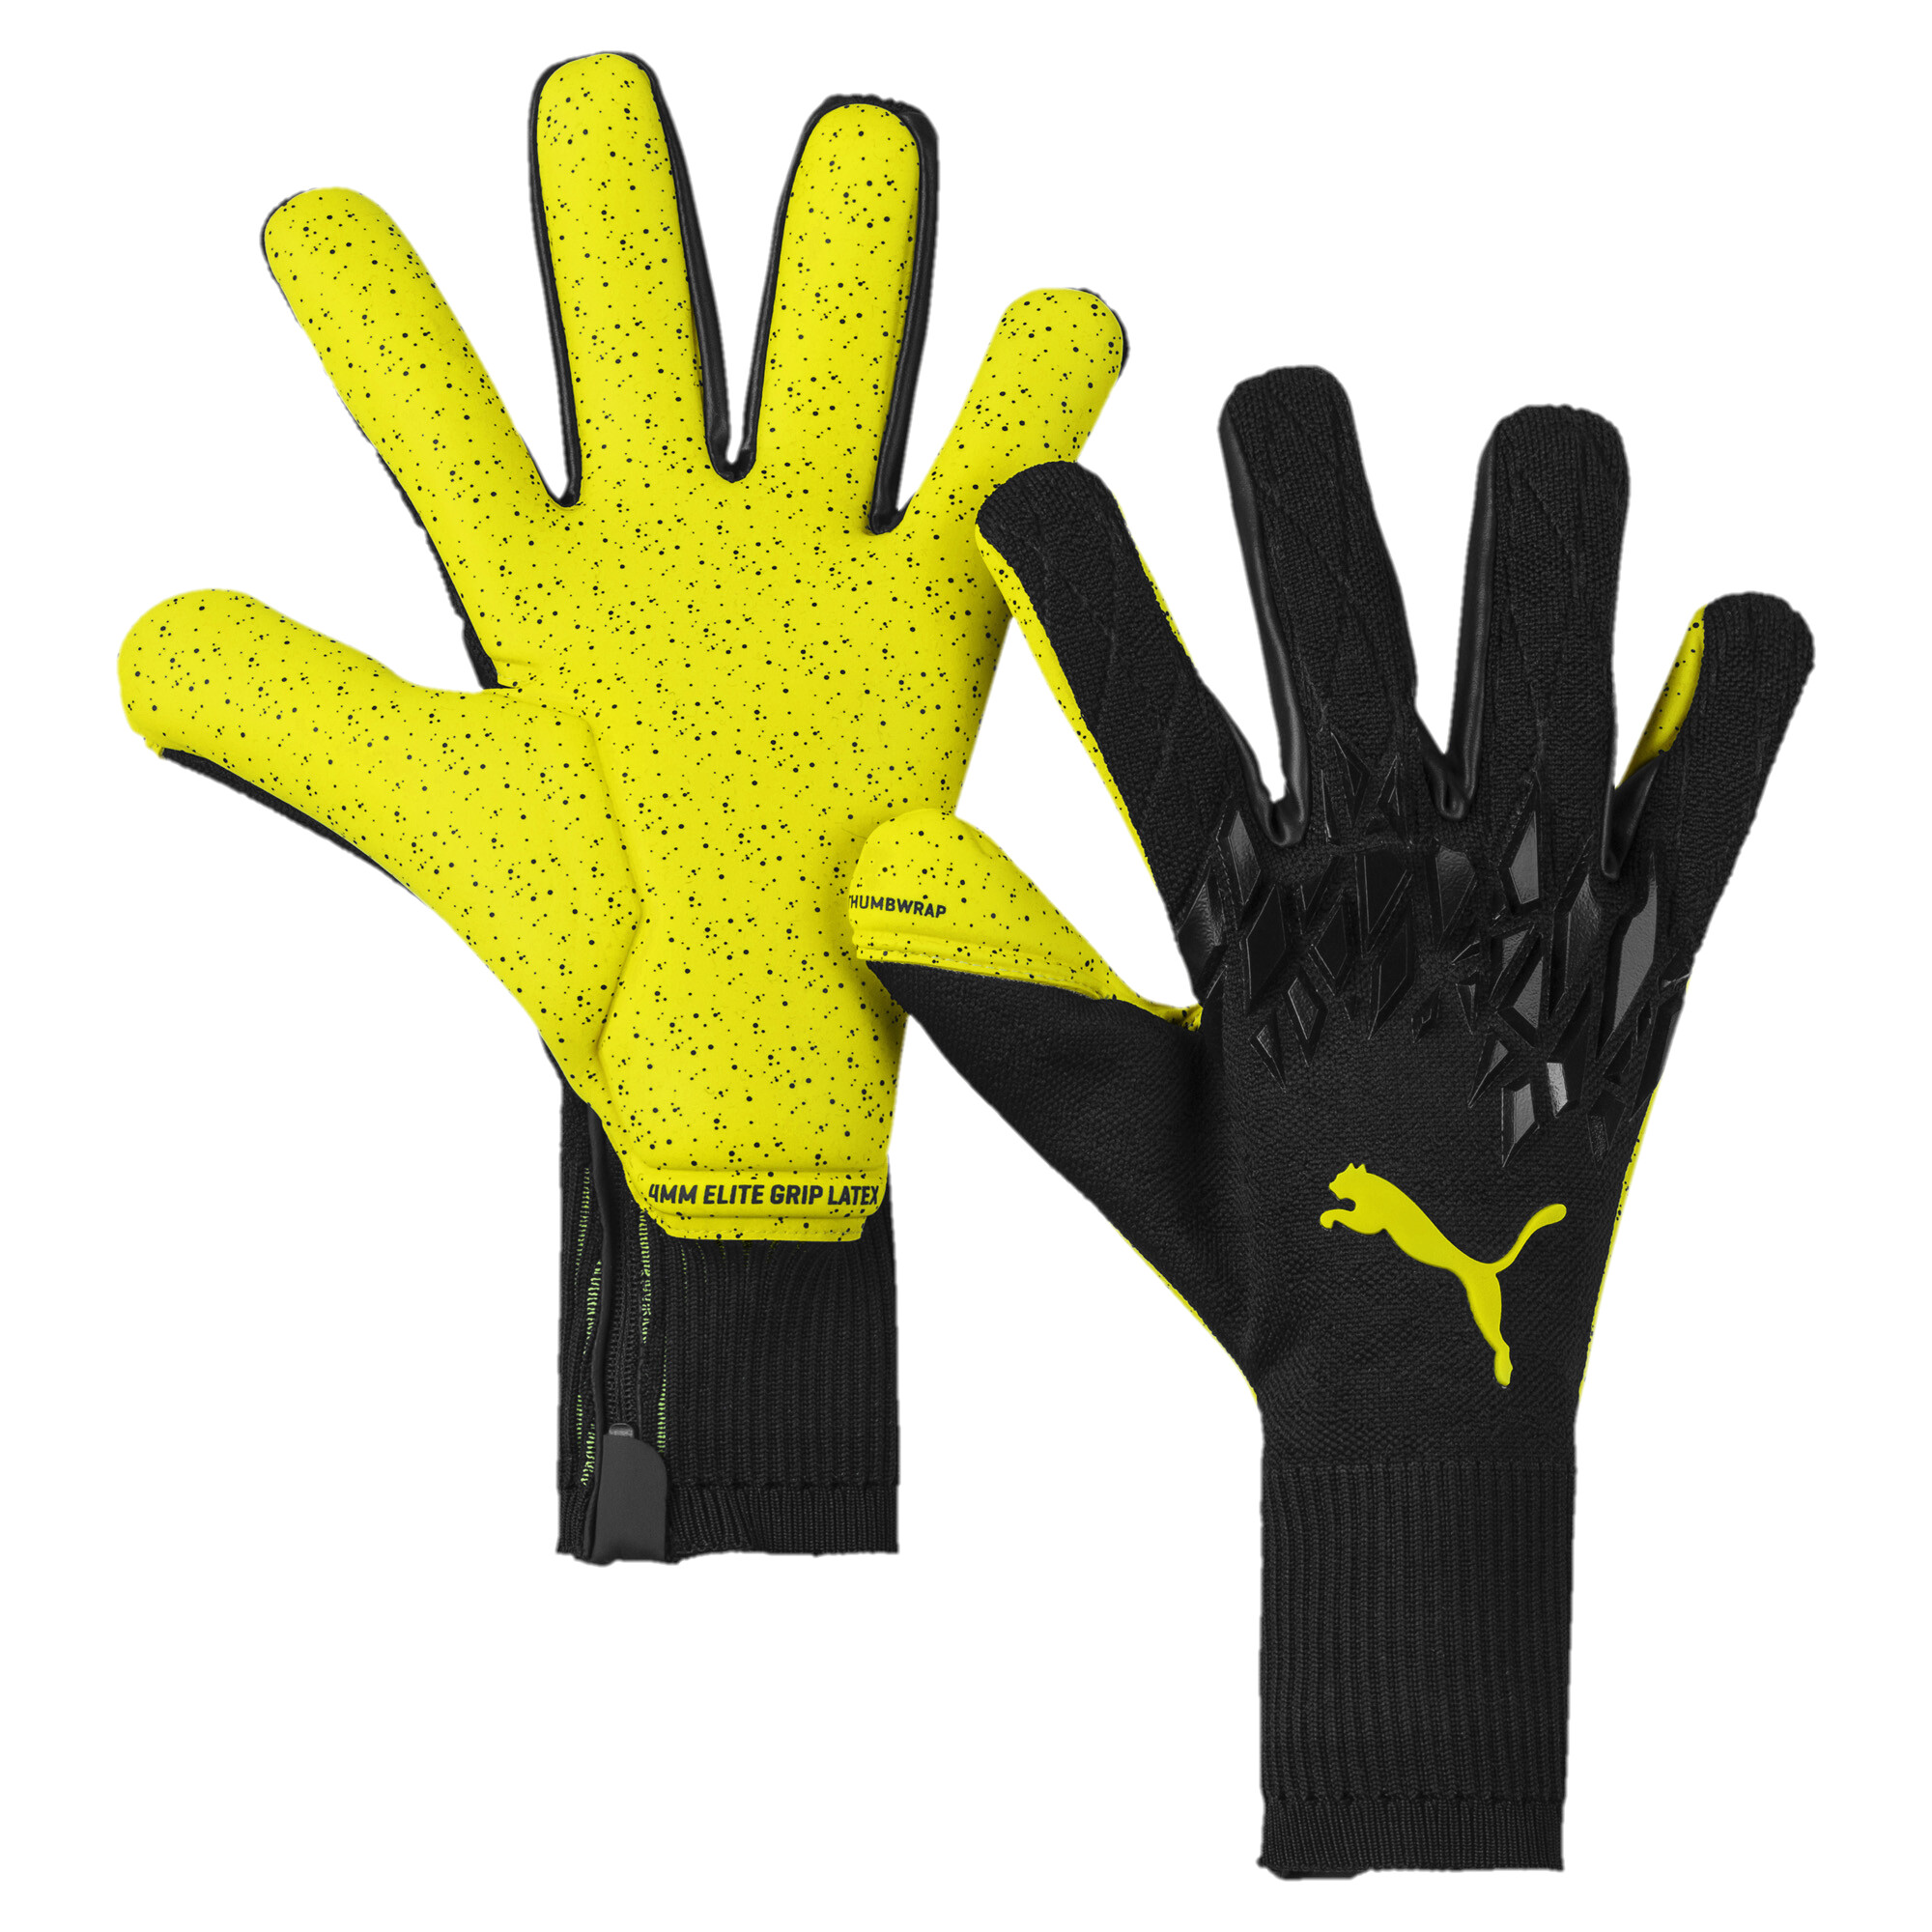 Puma FUTURE Grip 19.1 Football Goalkeeper Gloves, Black, Size 7.5, Accessories